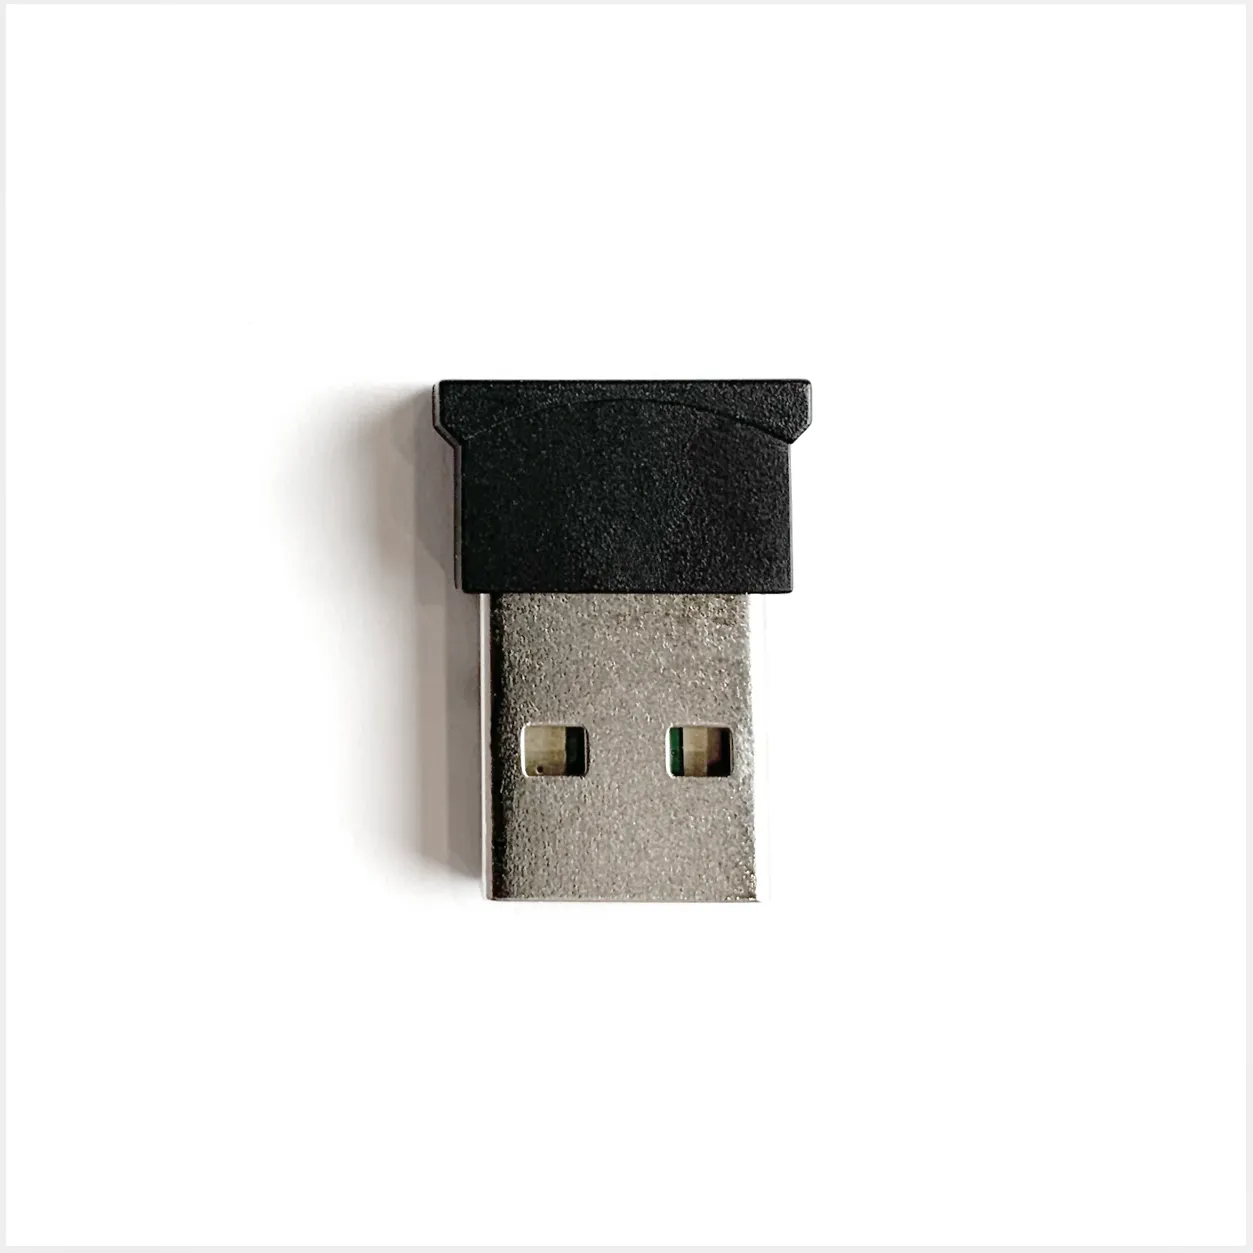 Bluetooth BLE iBeacon (BC-U1-MultiBeacon) – USB powered